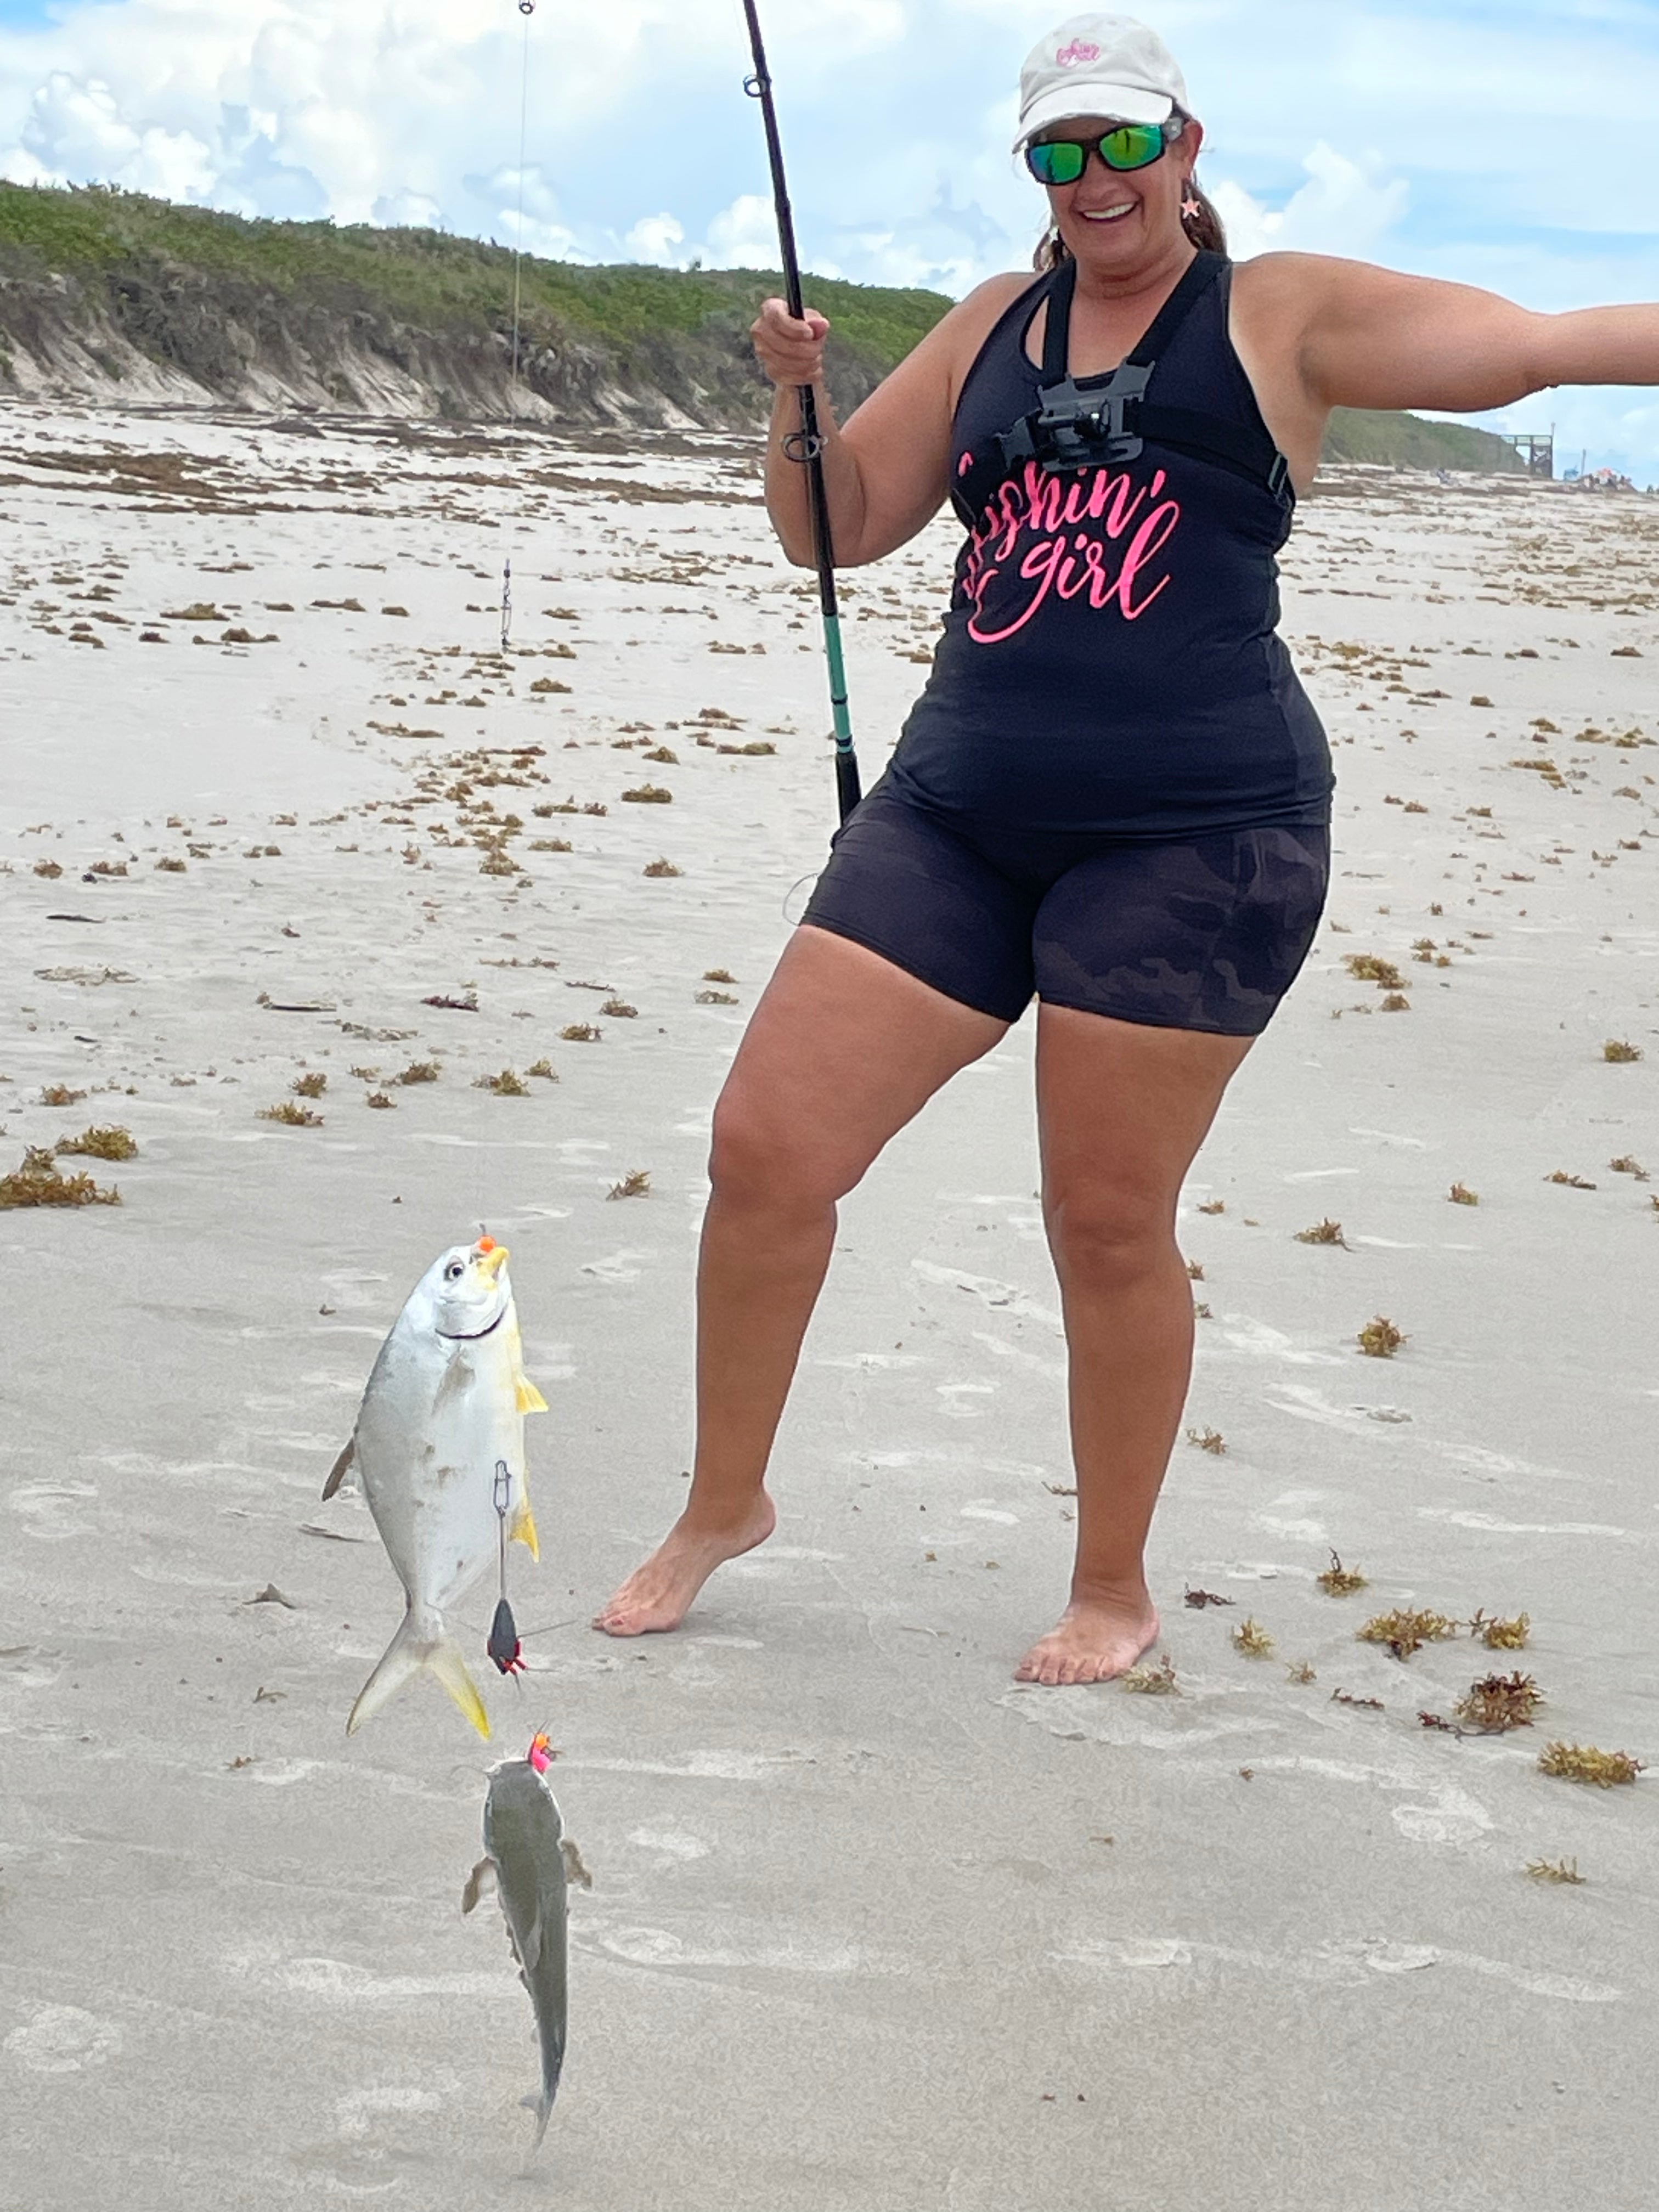 Welcome to Fishin' Girl!